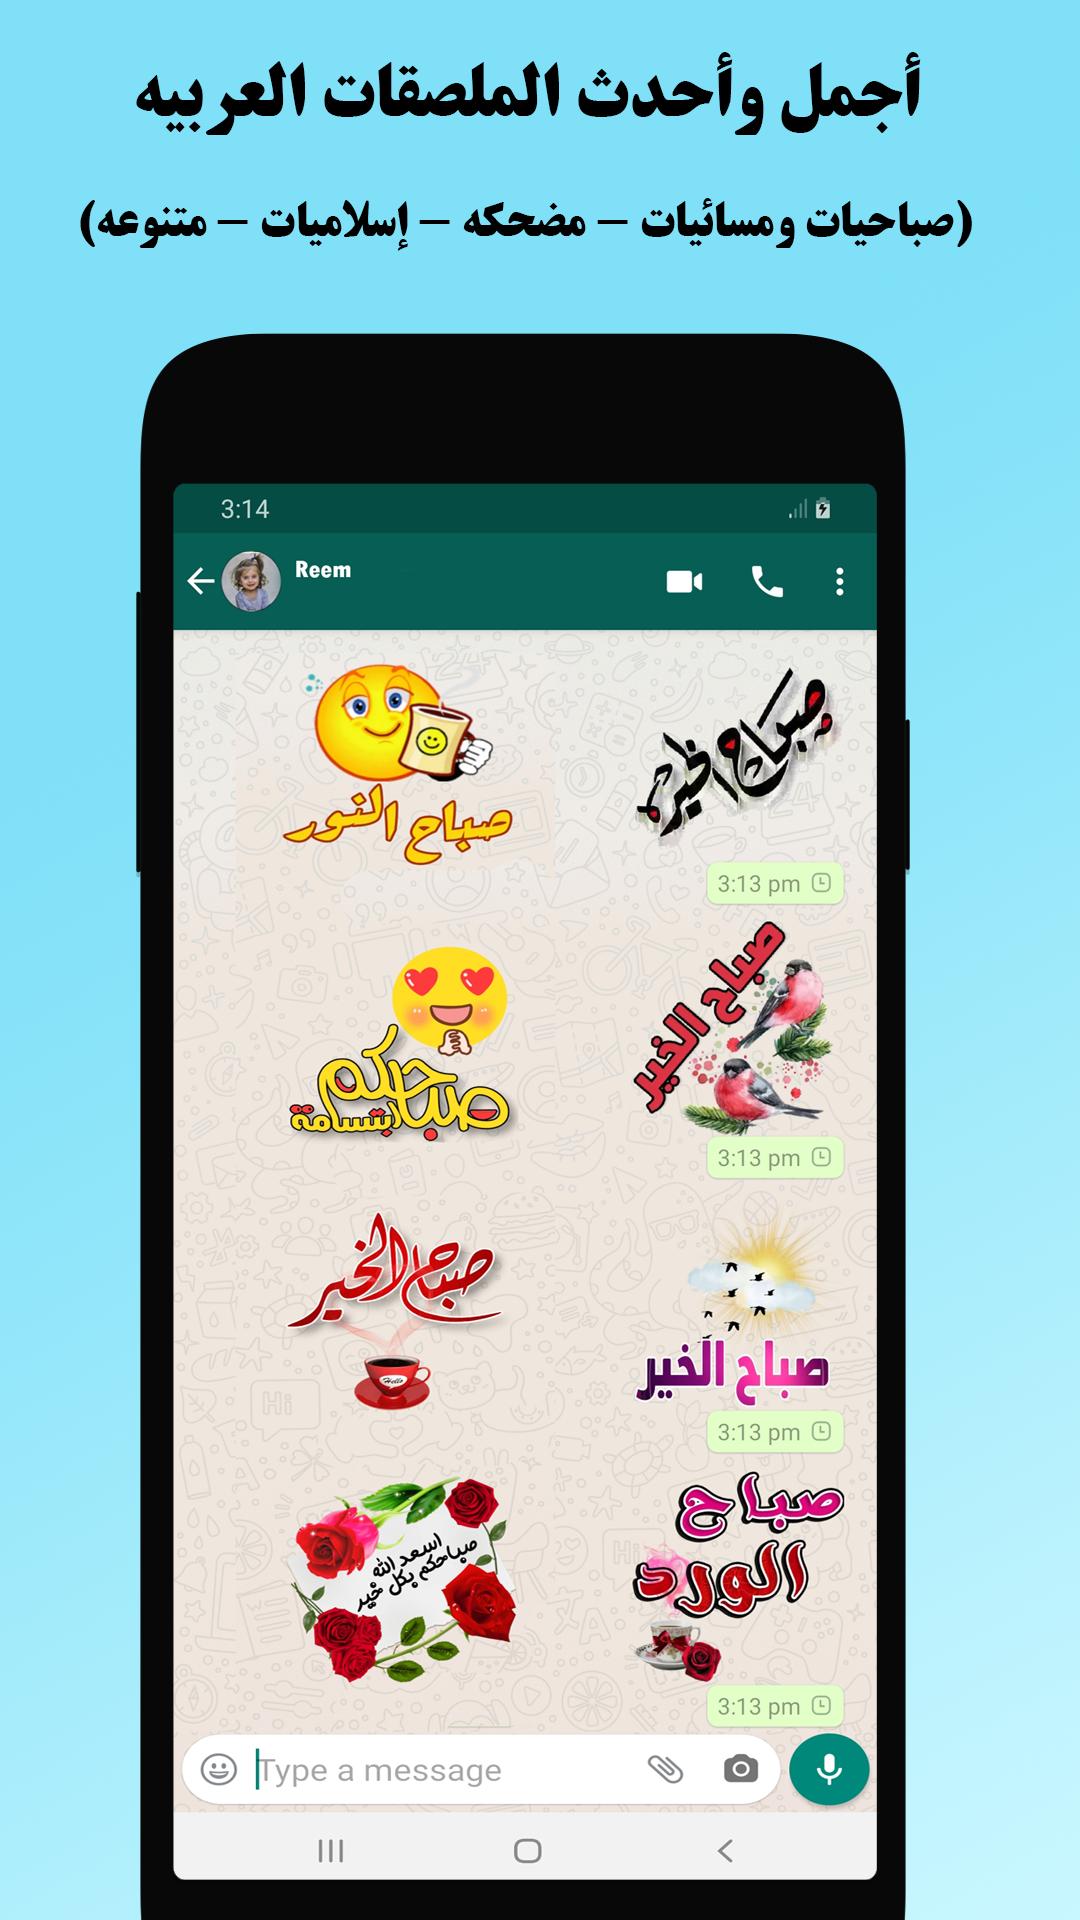 ملصقات عربية - ملصقات واتساب 2020 for Android - APK Download